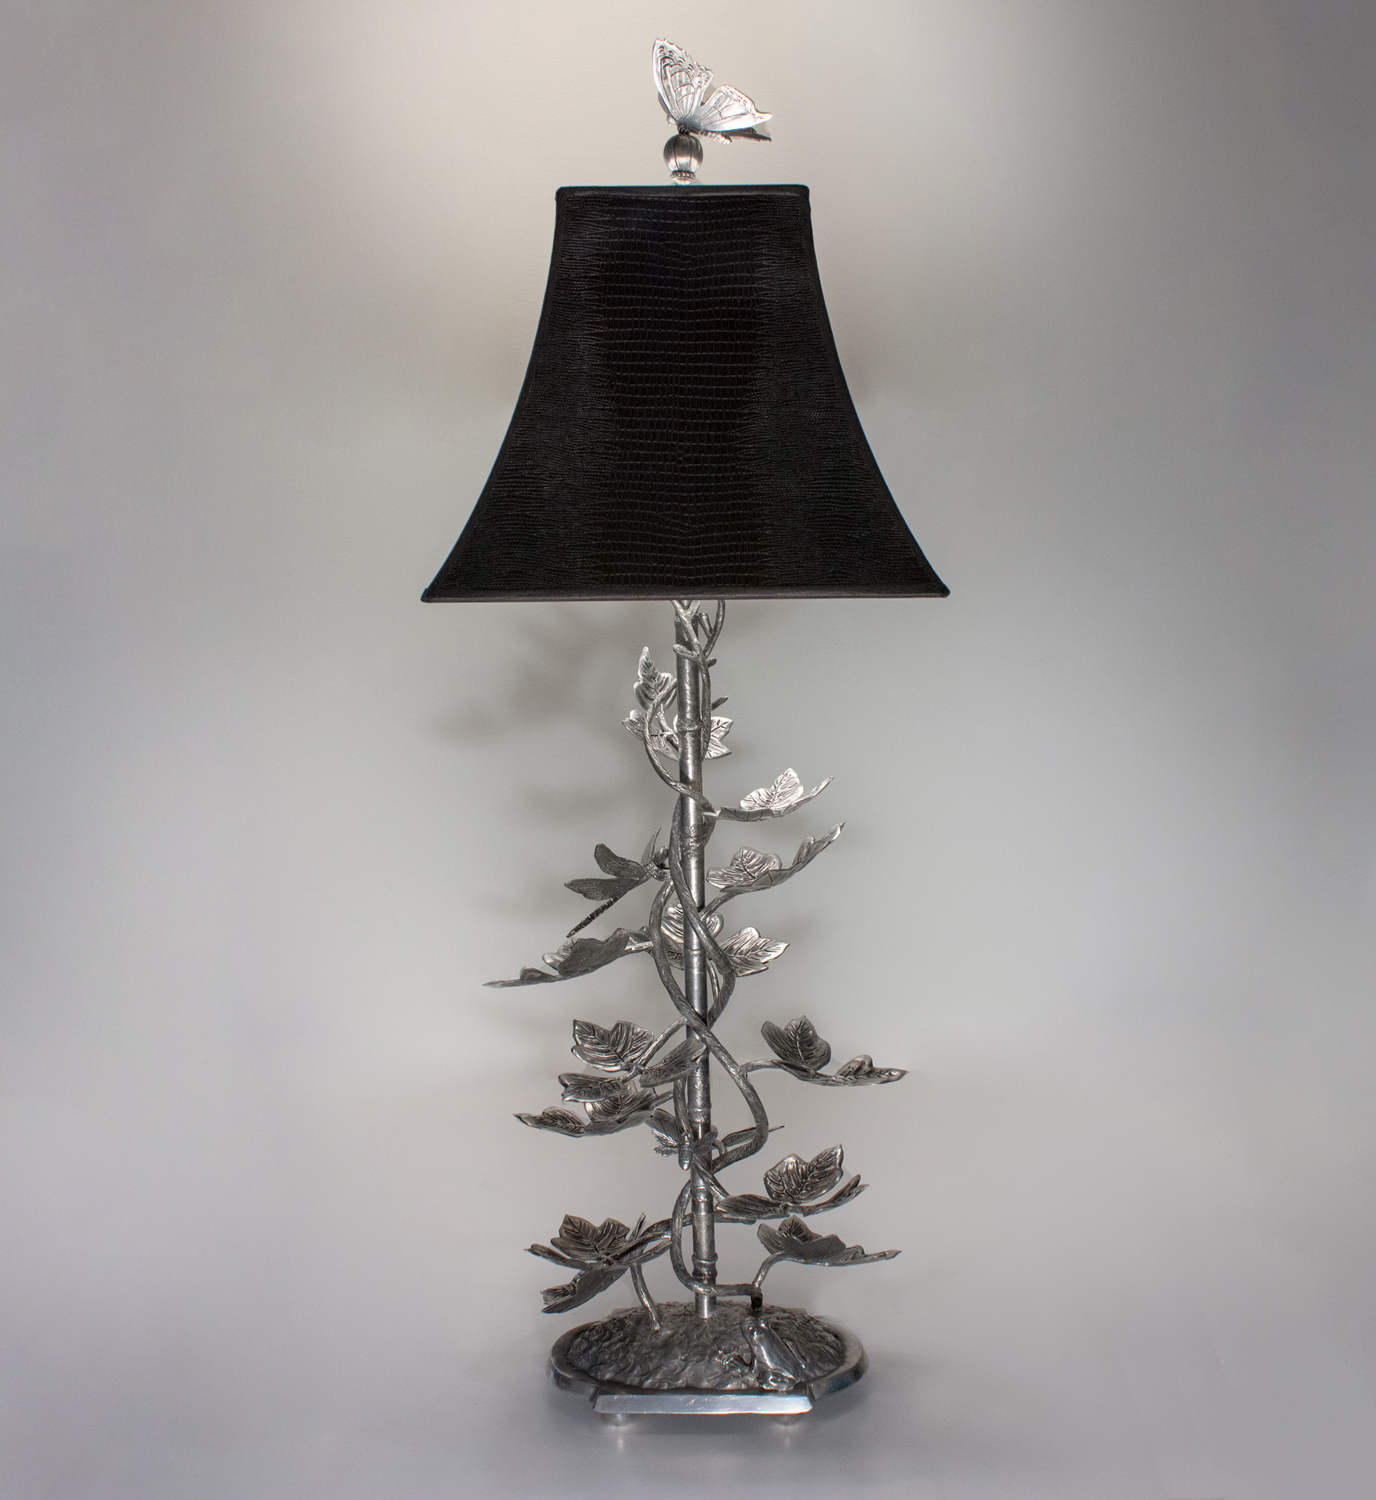 Twisted Kudzu Lamp by Charles H. Reinike III